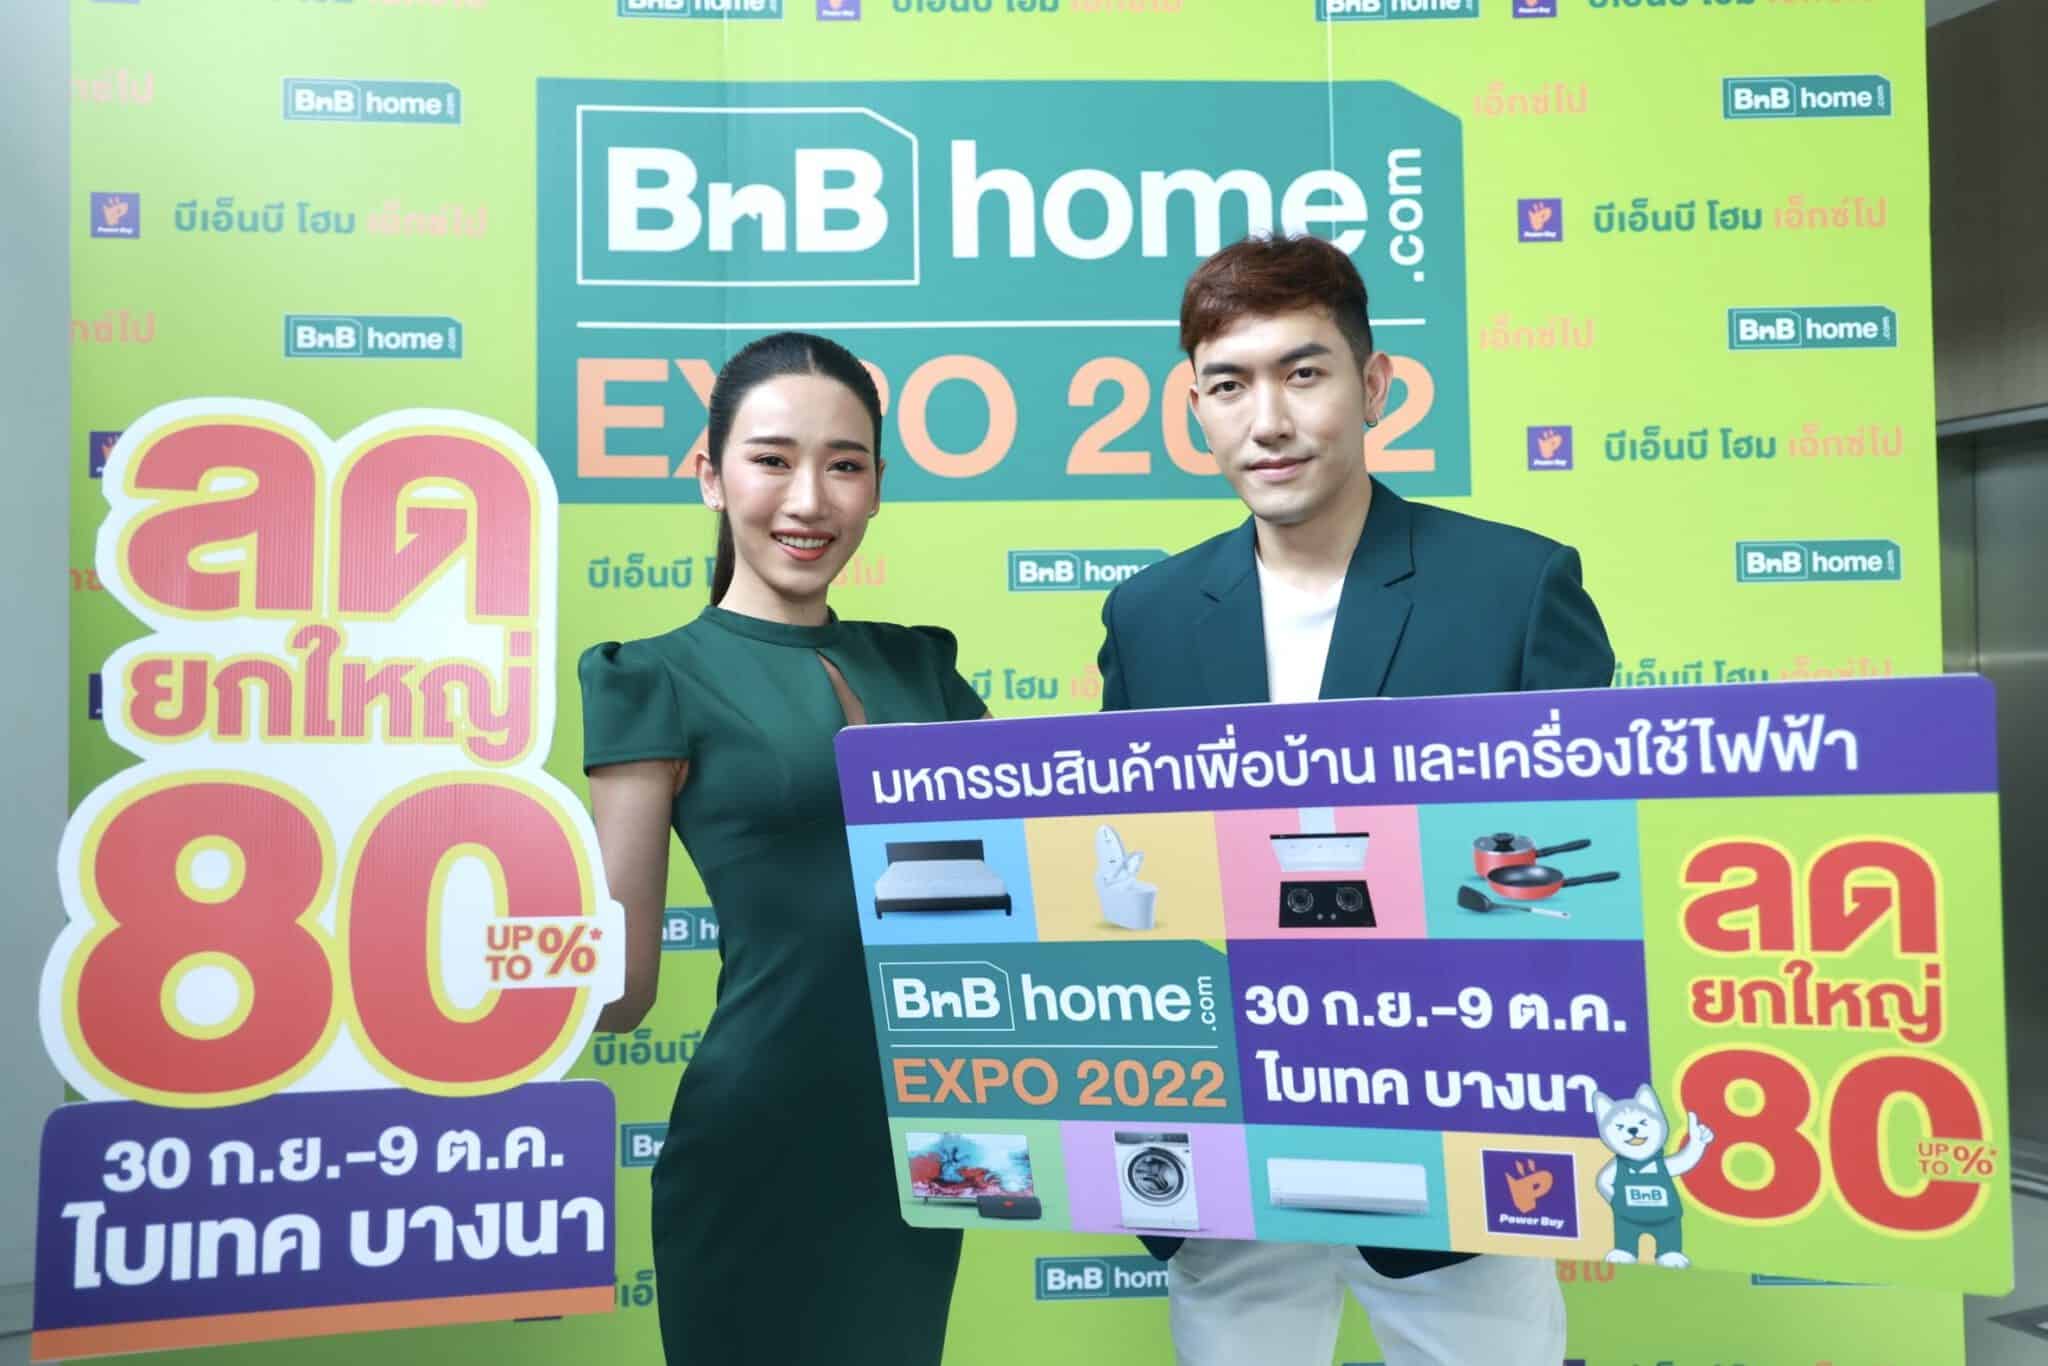 BnB home EXPO 2022 มหกรรมสินค้าเพื่อบ้าน DigitalMore.co